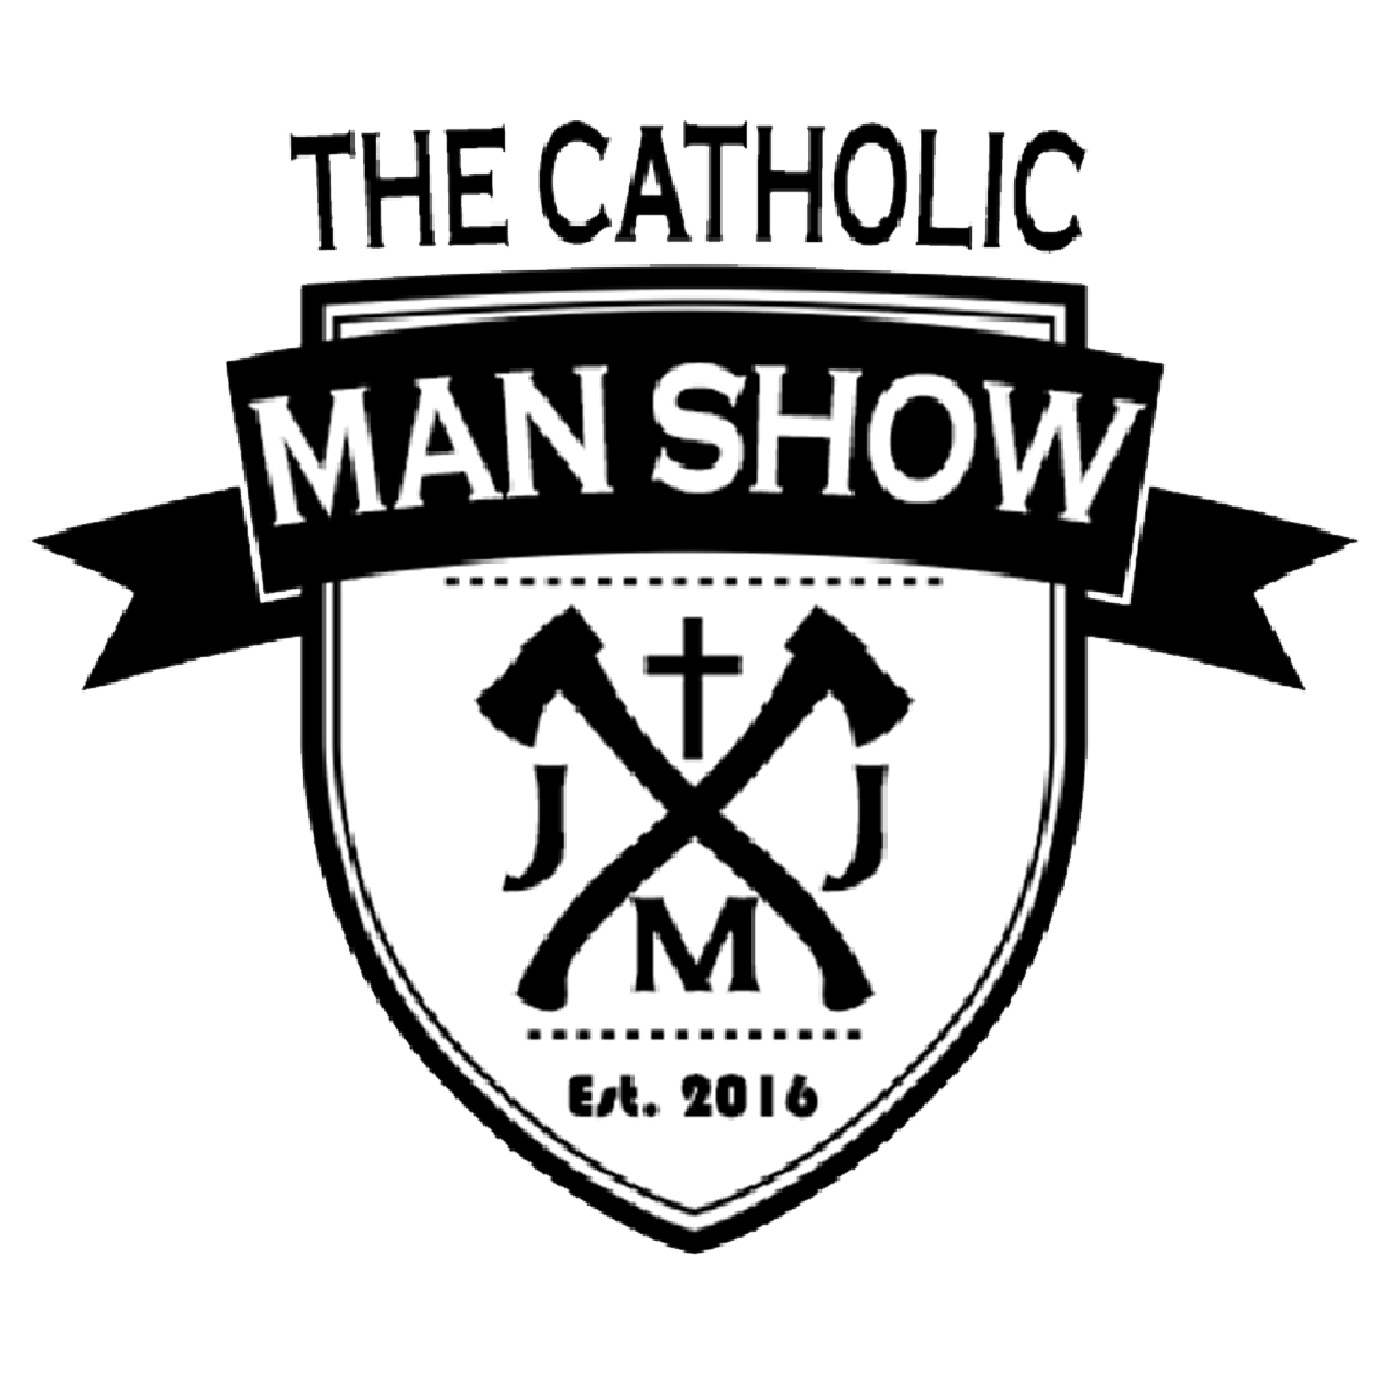 The Catholic Man Show Episode 6: Answering Atheism